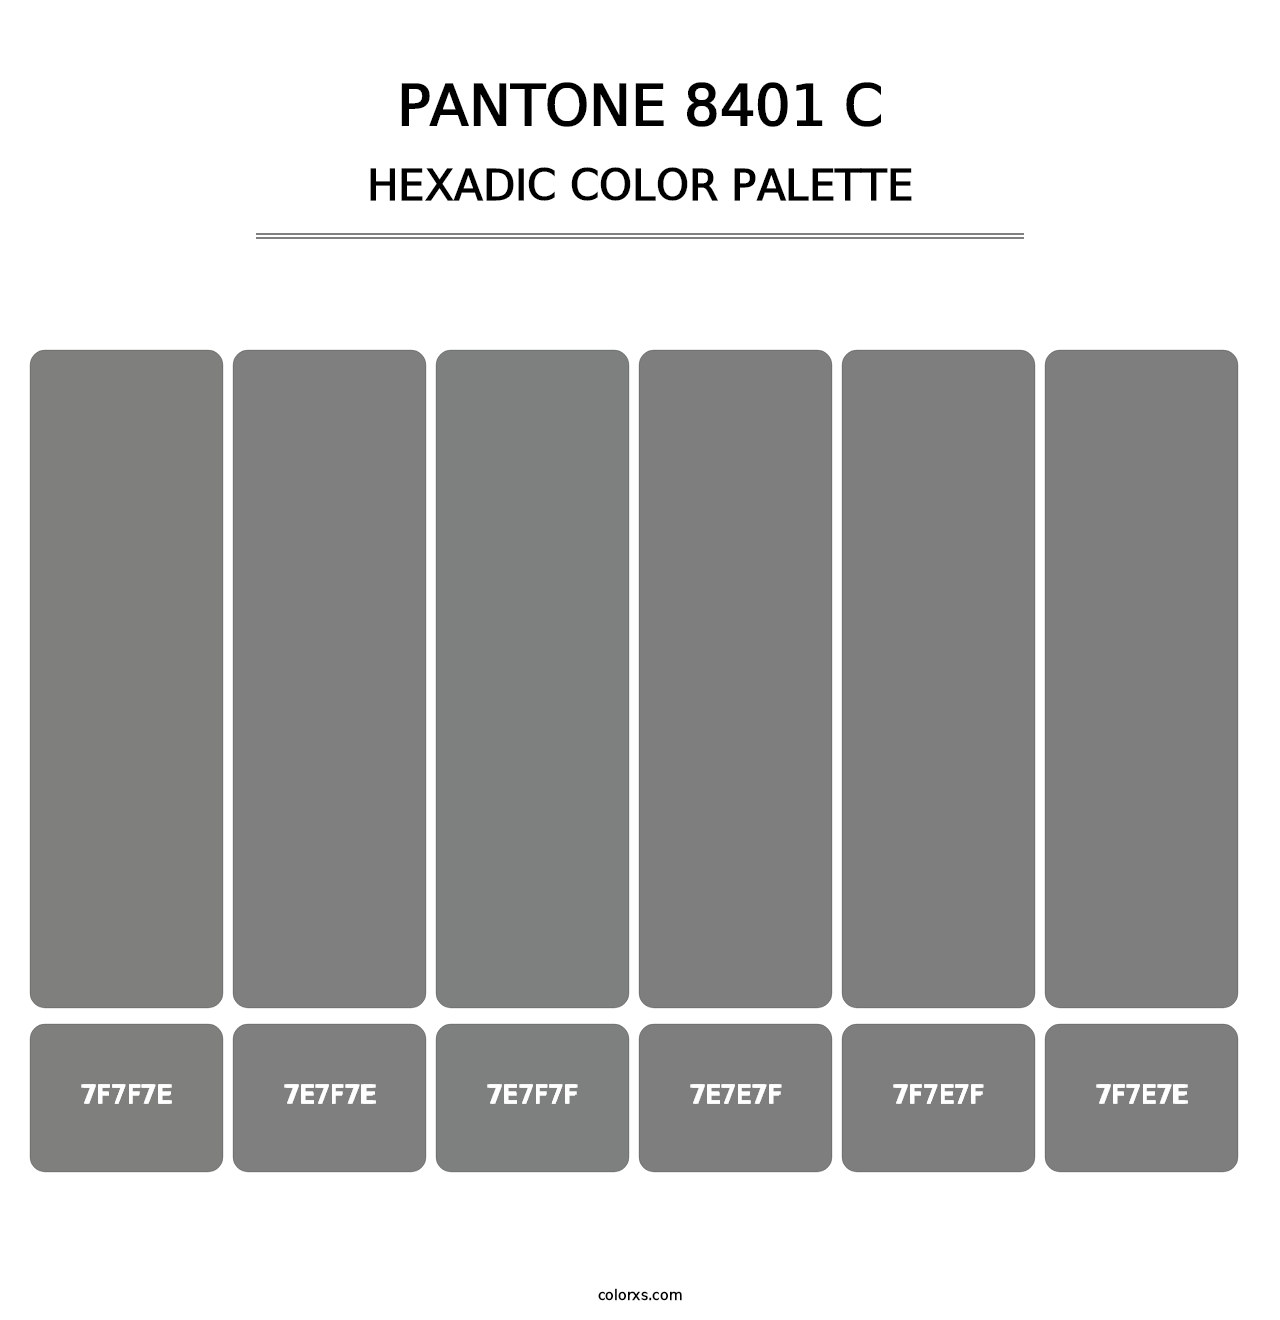 PANTONE 8401 C - Hexadic Color Palette